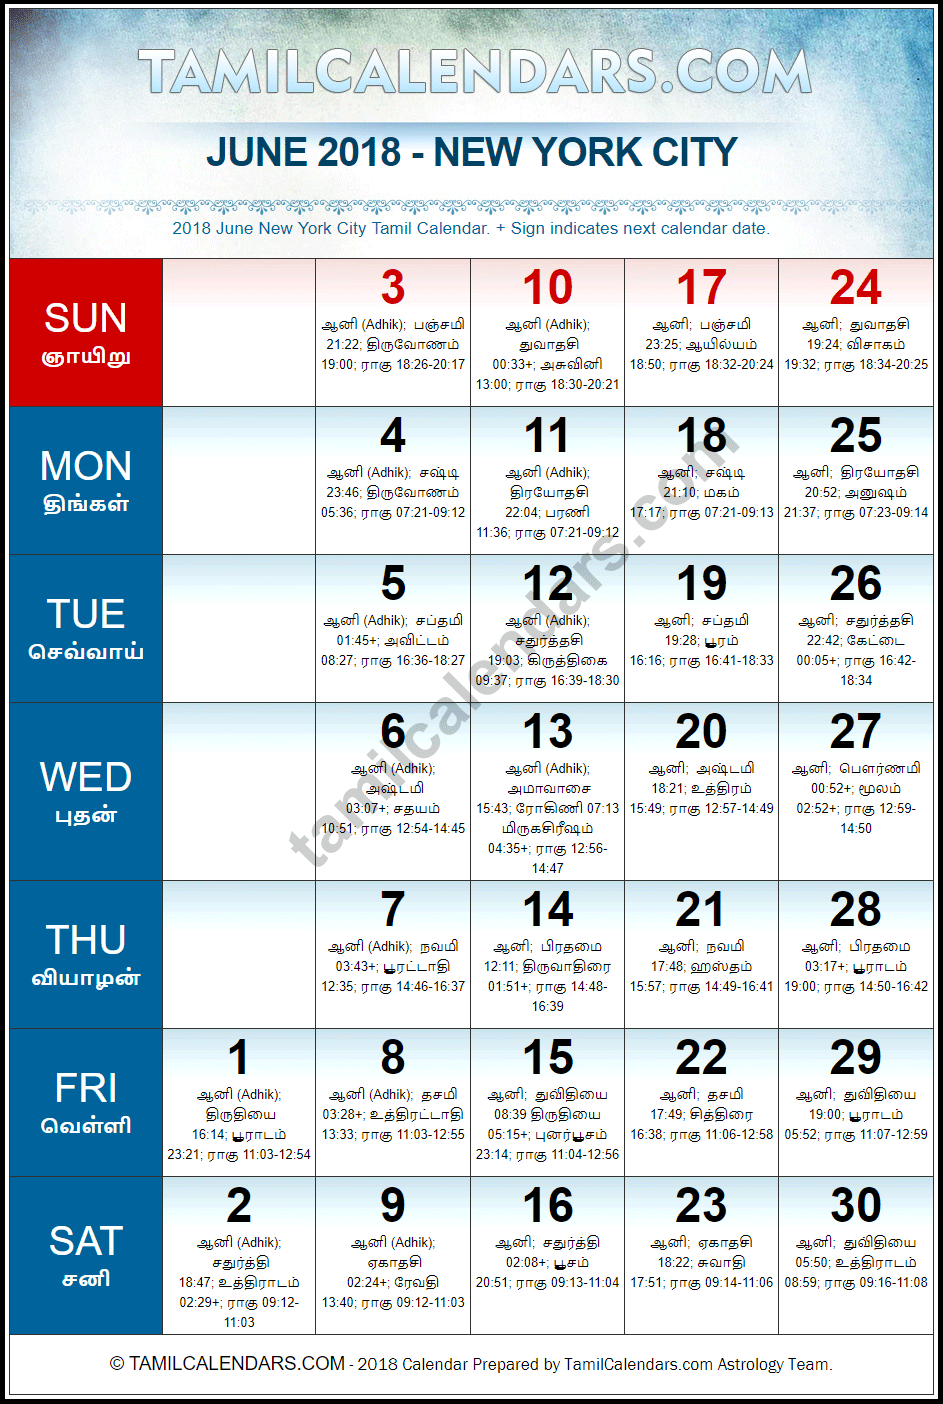 June 2018 Tamil Calendar for New York, USA